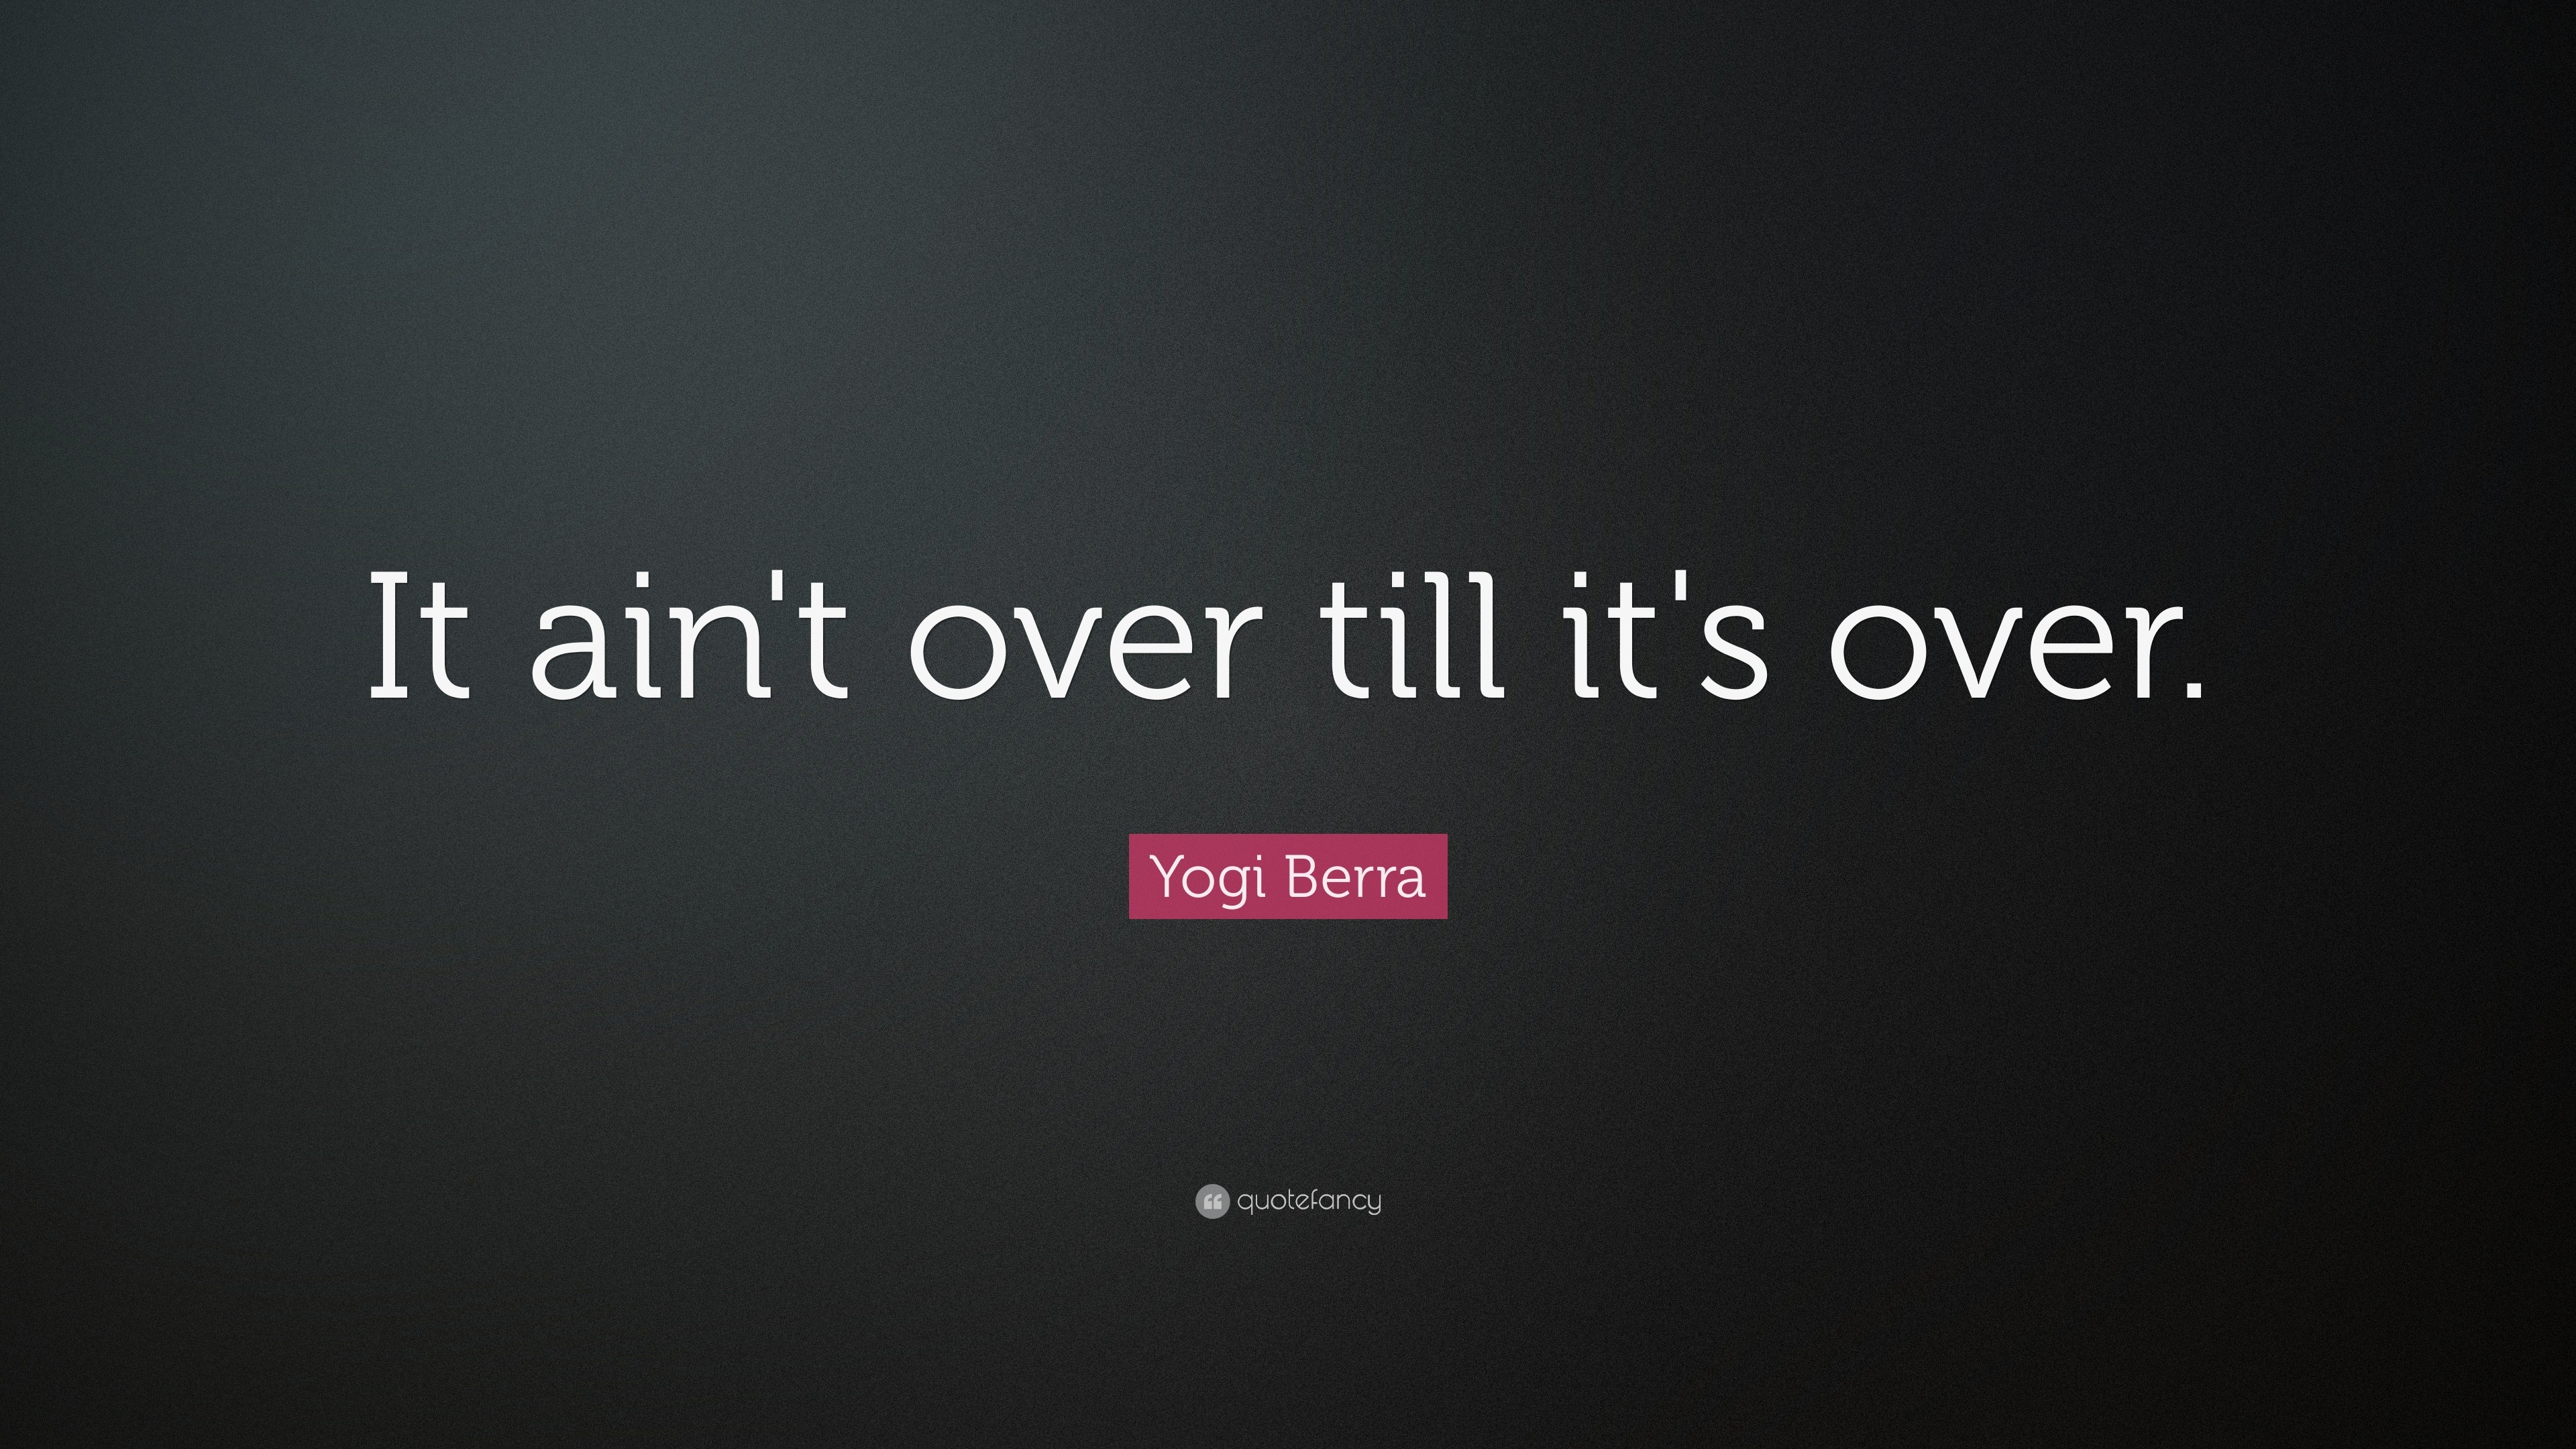 35 of Yogi Berra's most memorable quotes